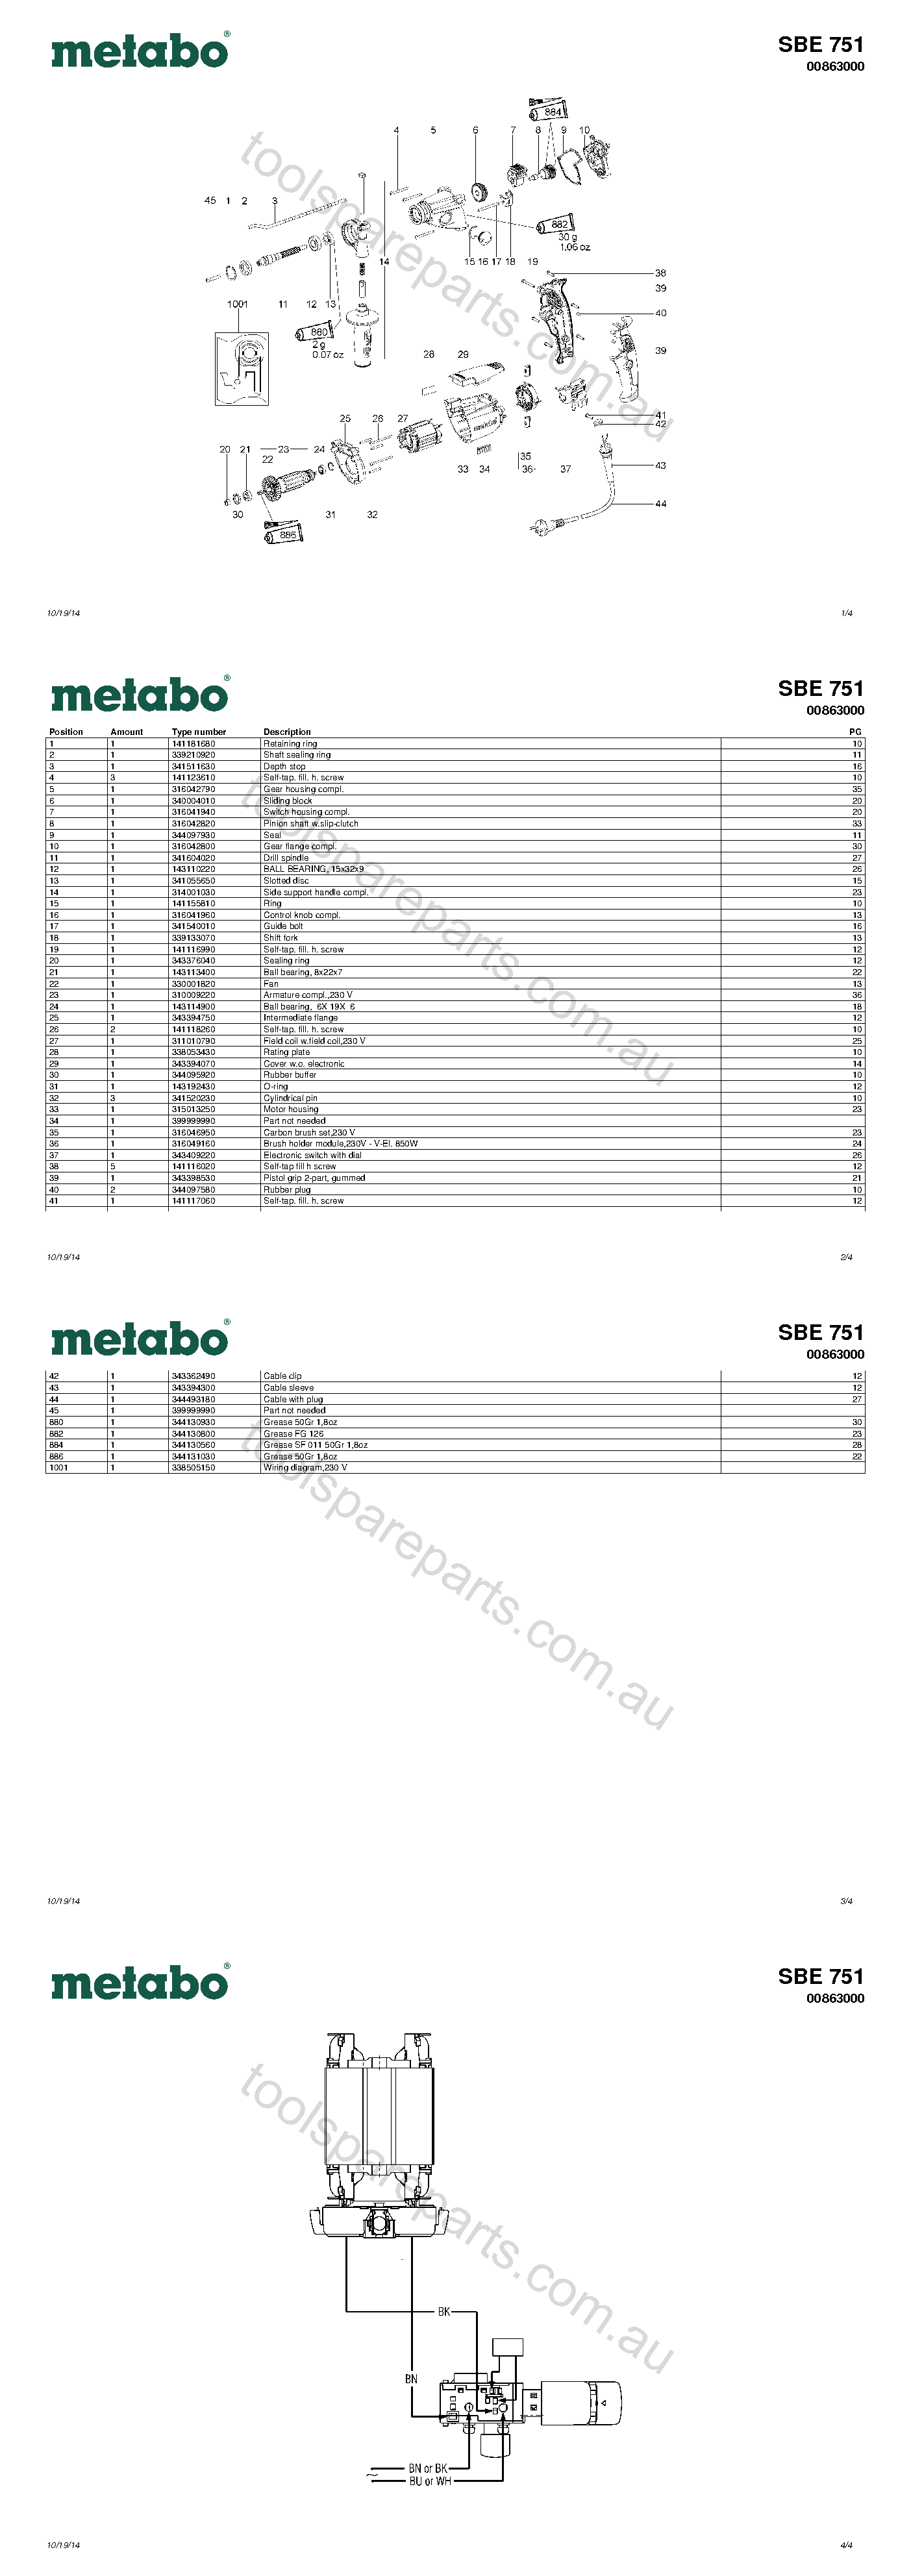 Metabo SBE 751 00863000  Diagram 1